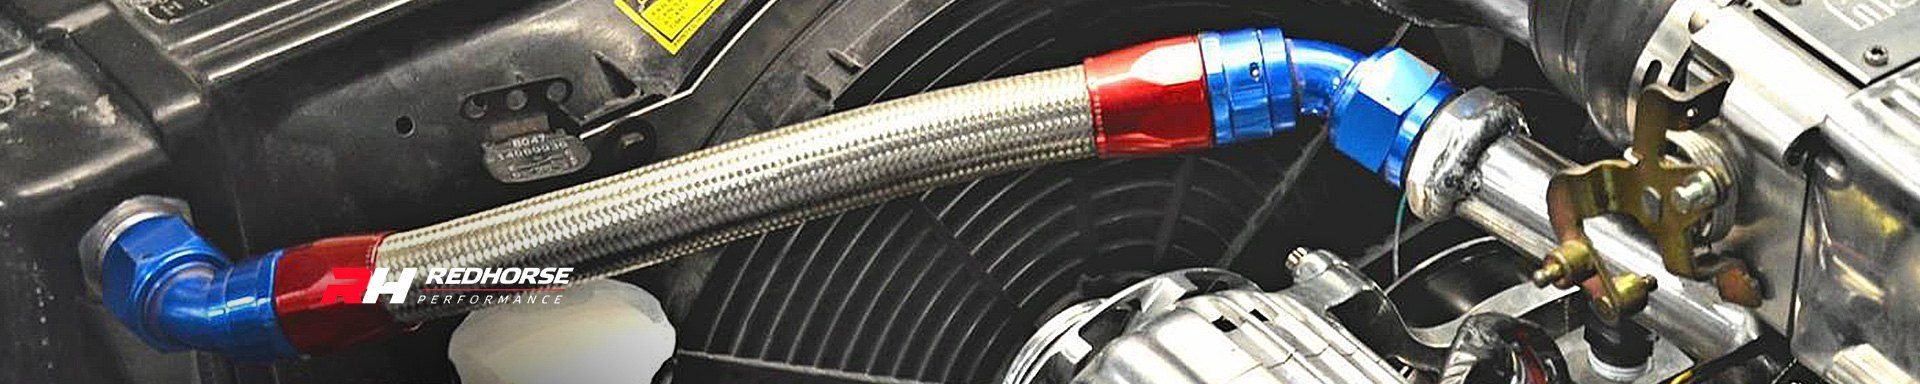 Redhorse Performance Wheel & Tire Service Tools